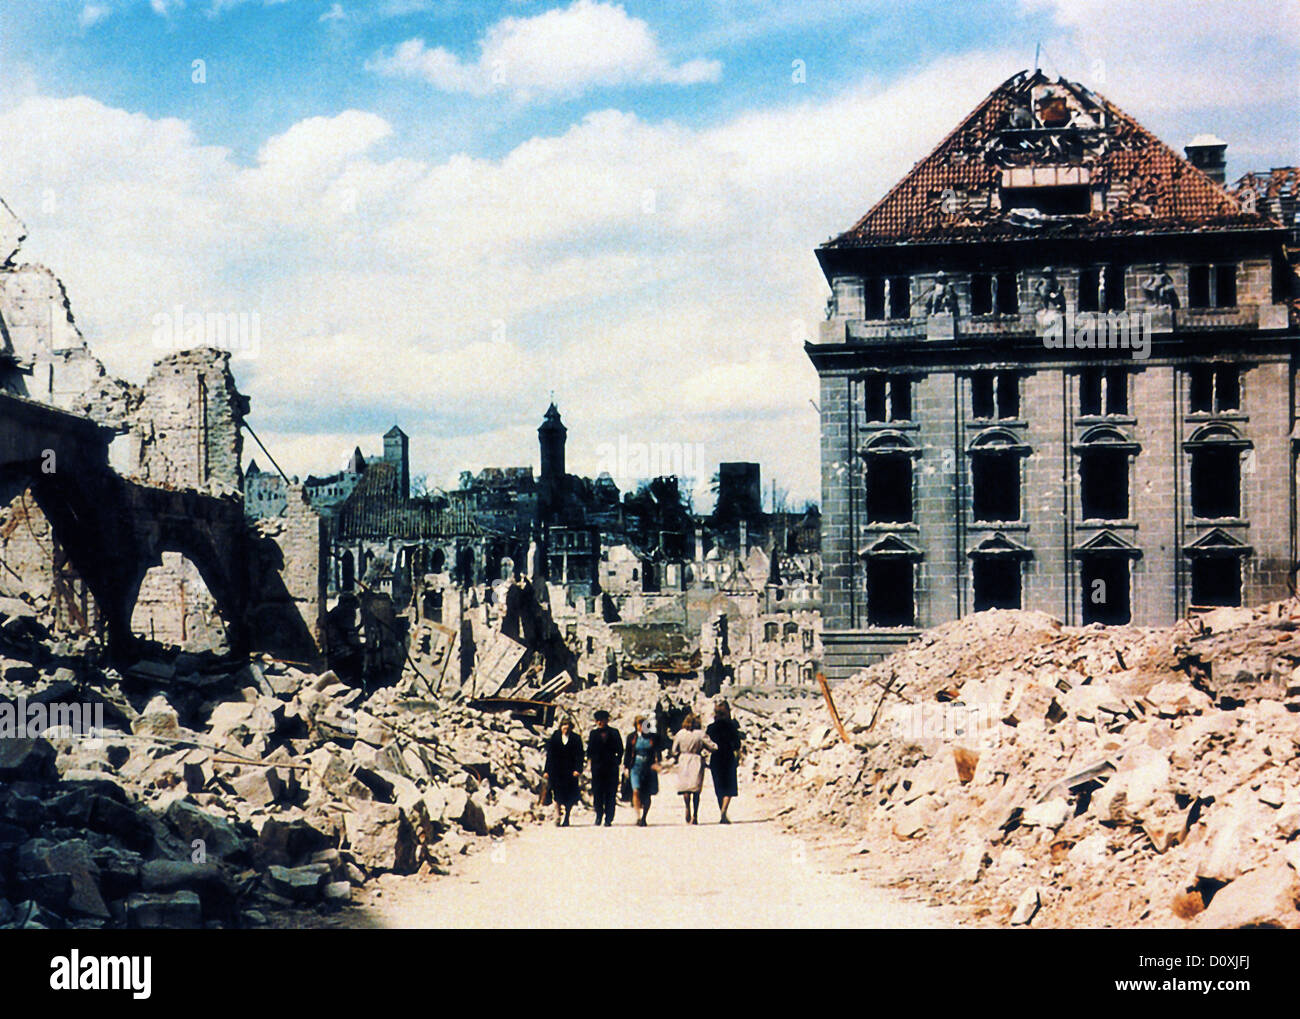 Nuremberg, Ruins, People, walking, bombed-out, city, World War II, Bavaria, Germany, 1945 Stock Photo